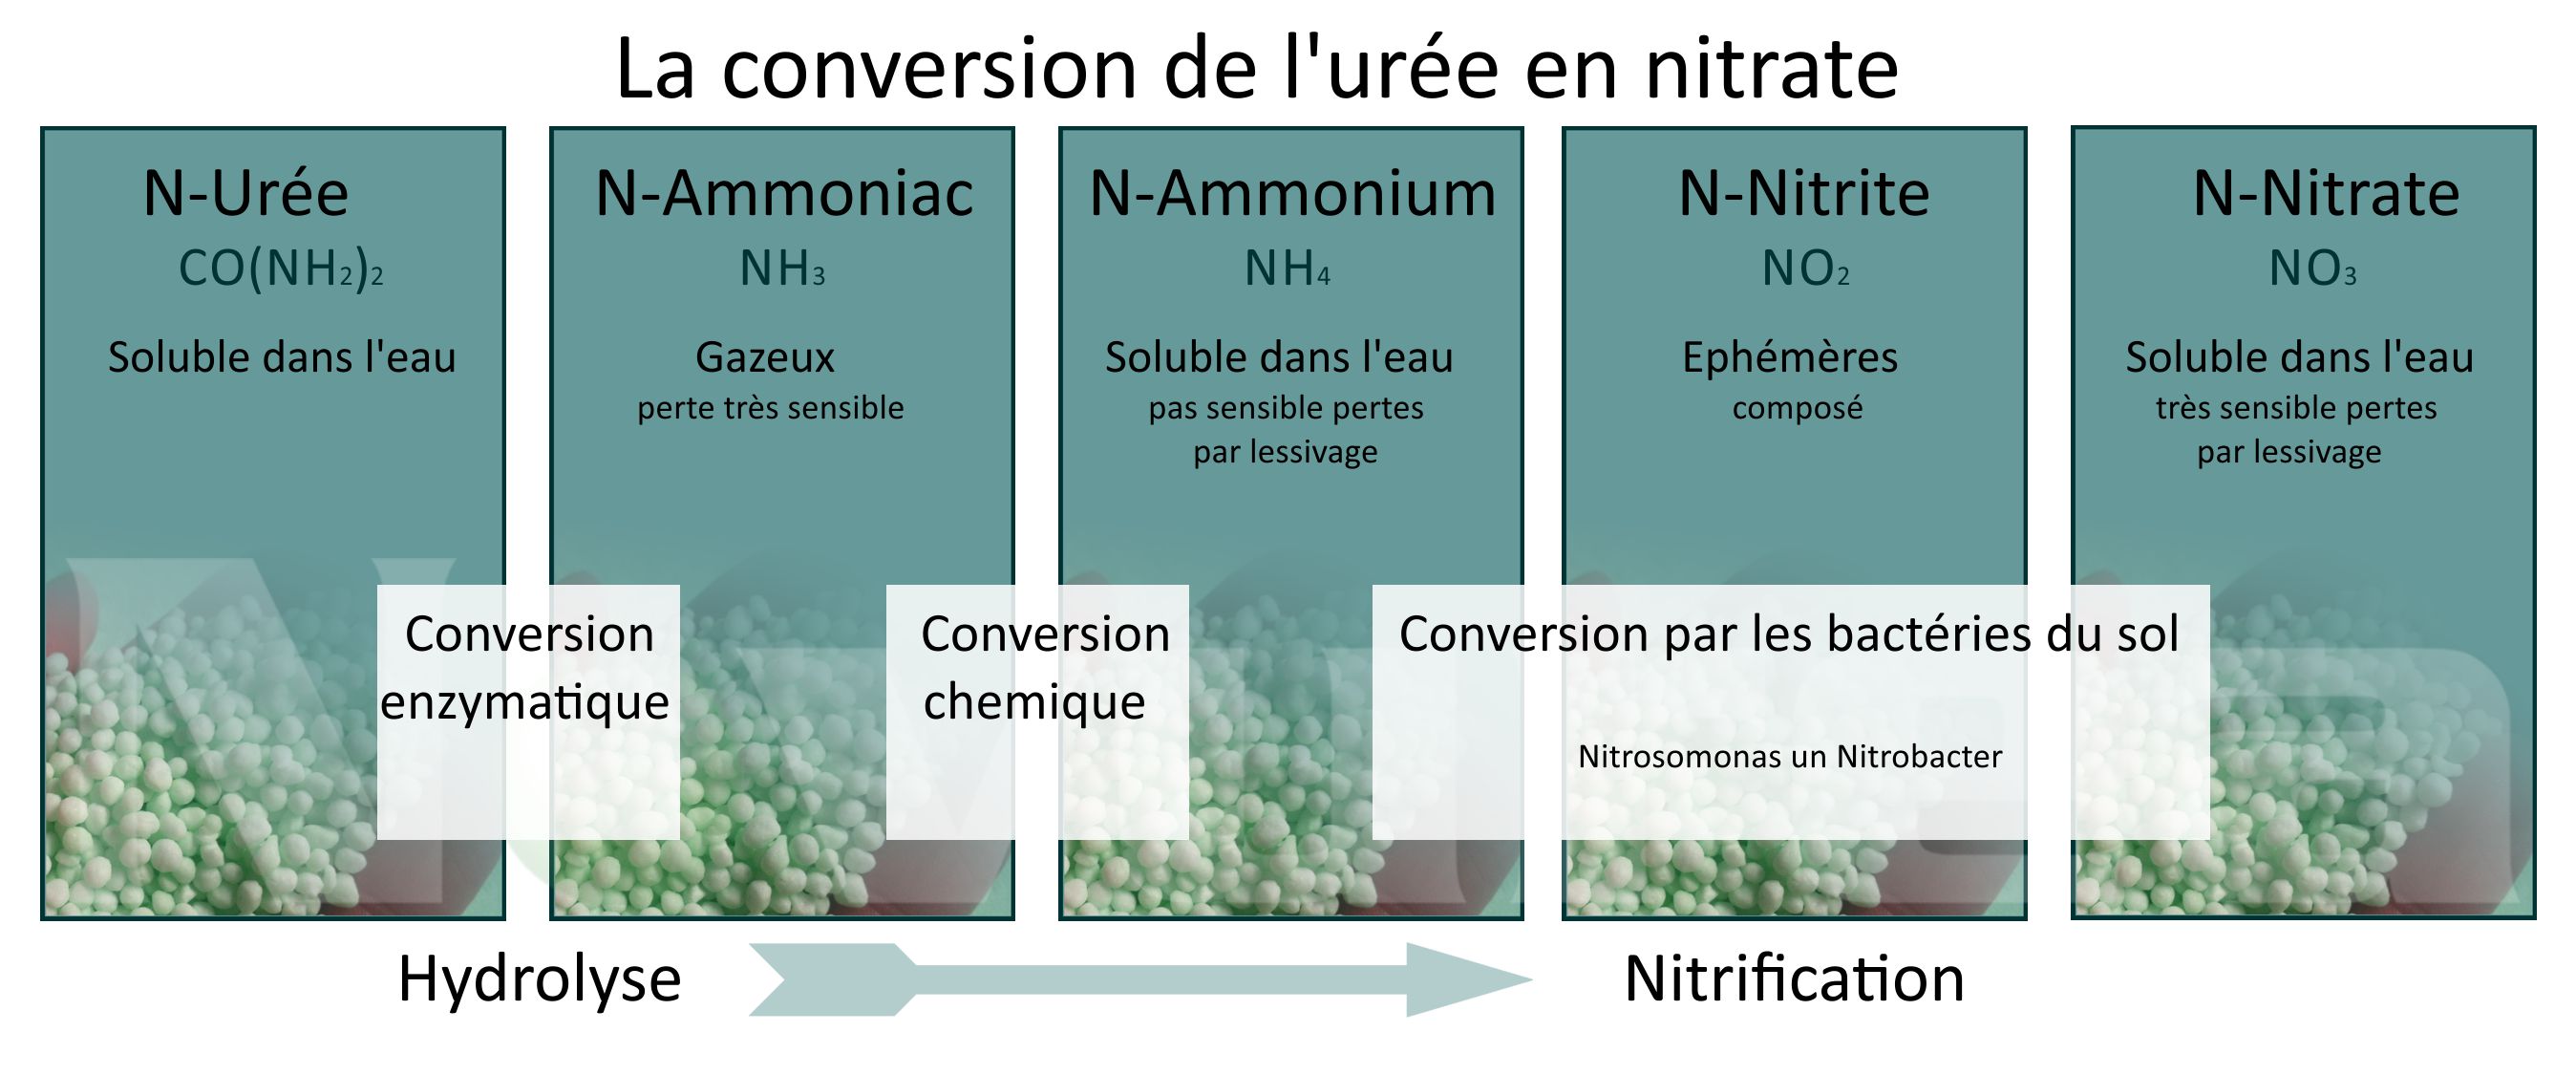 la conversion de l'urée en nitrate